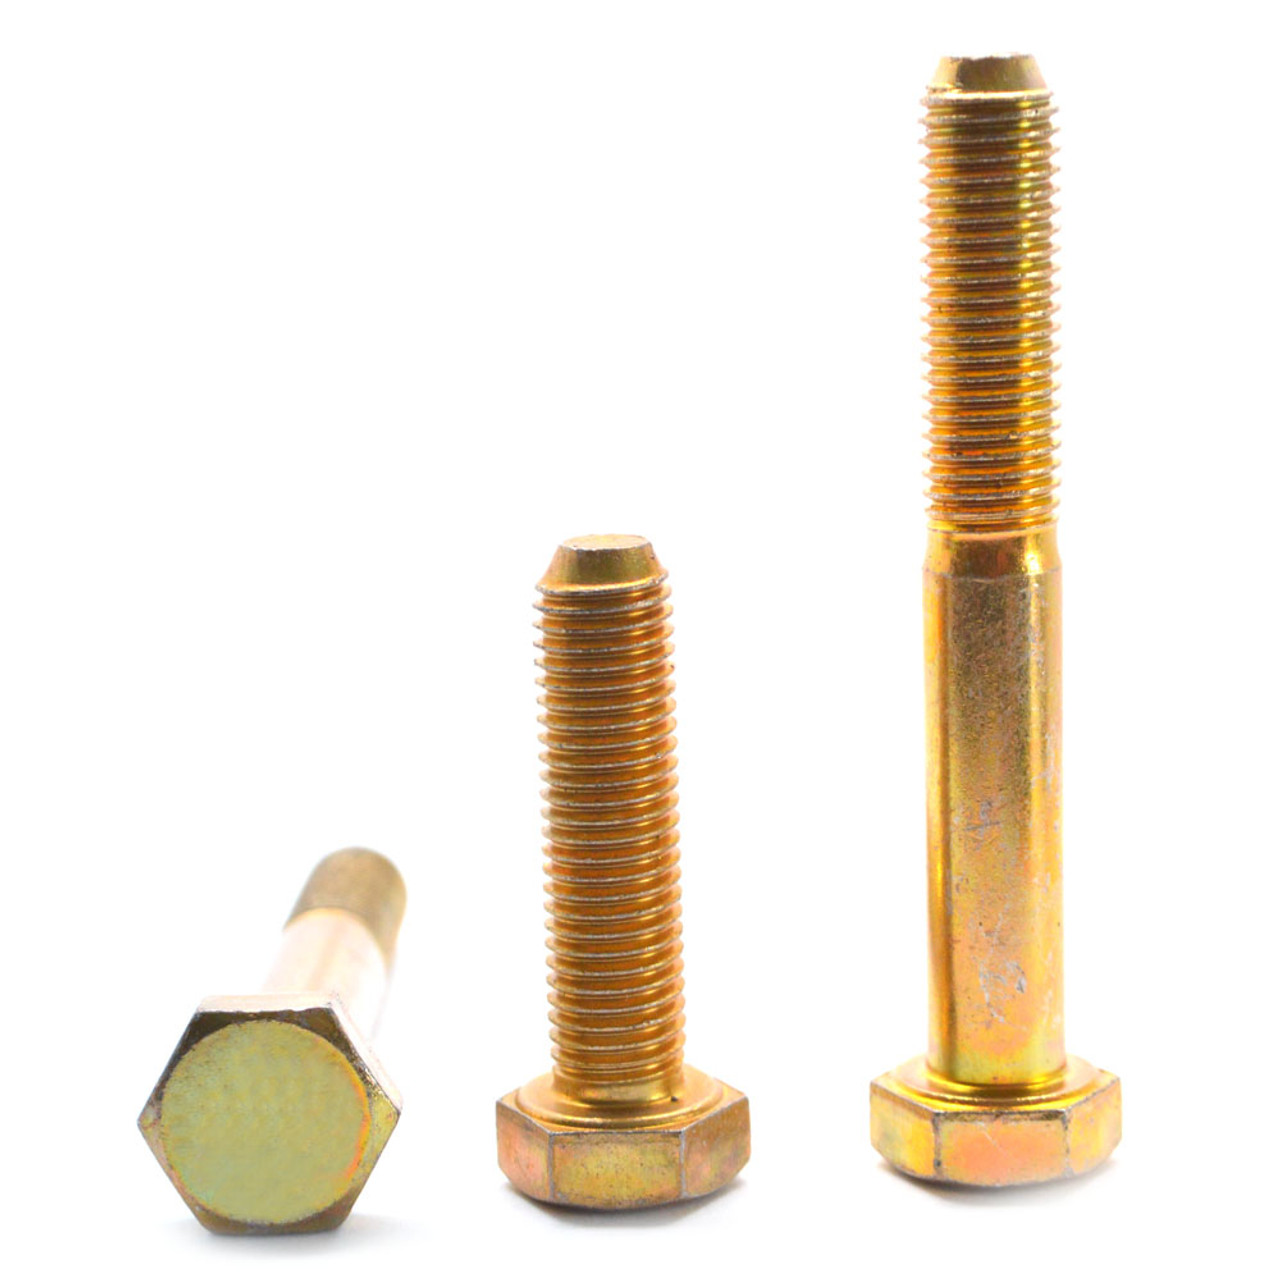 M10 x 1.50 x 50 Coarse Thread DIN 931 Class 10.9 Hex Cap Screw (Bolt) Alloy Steel Yellow Zinc Plated